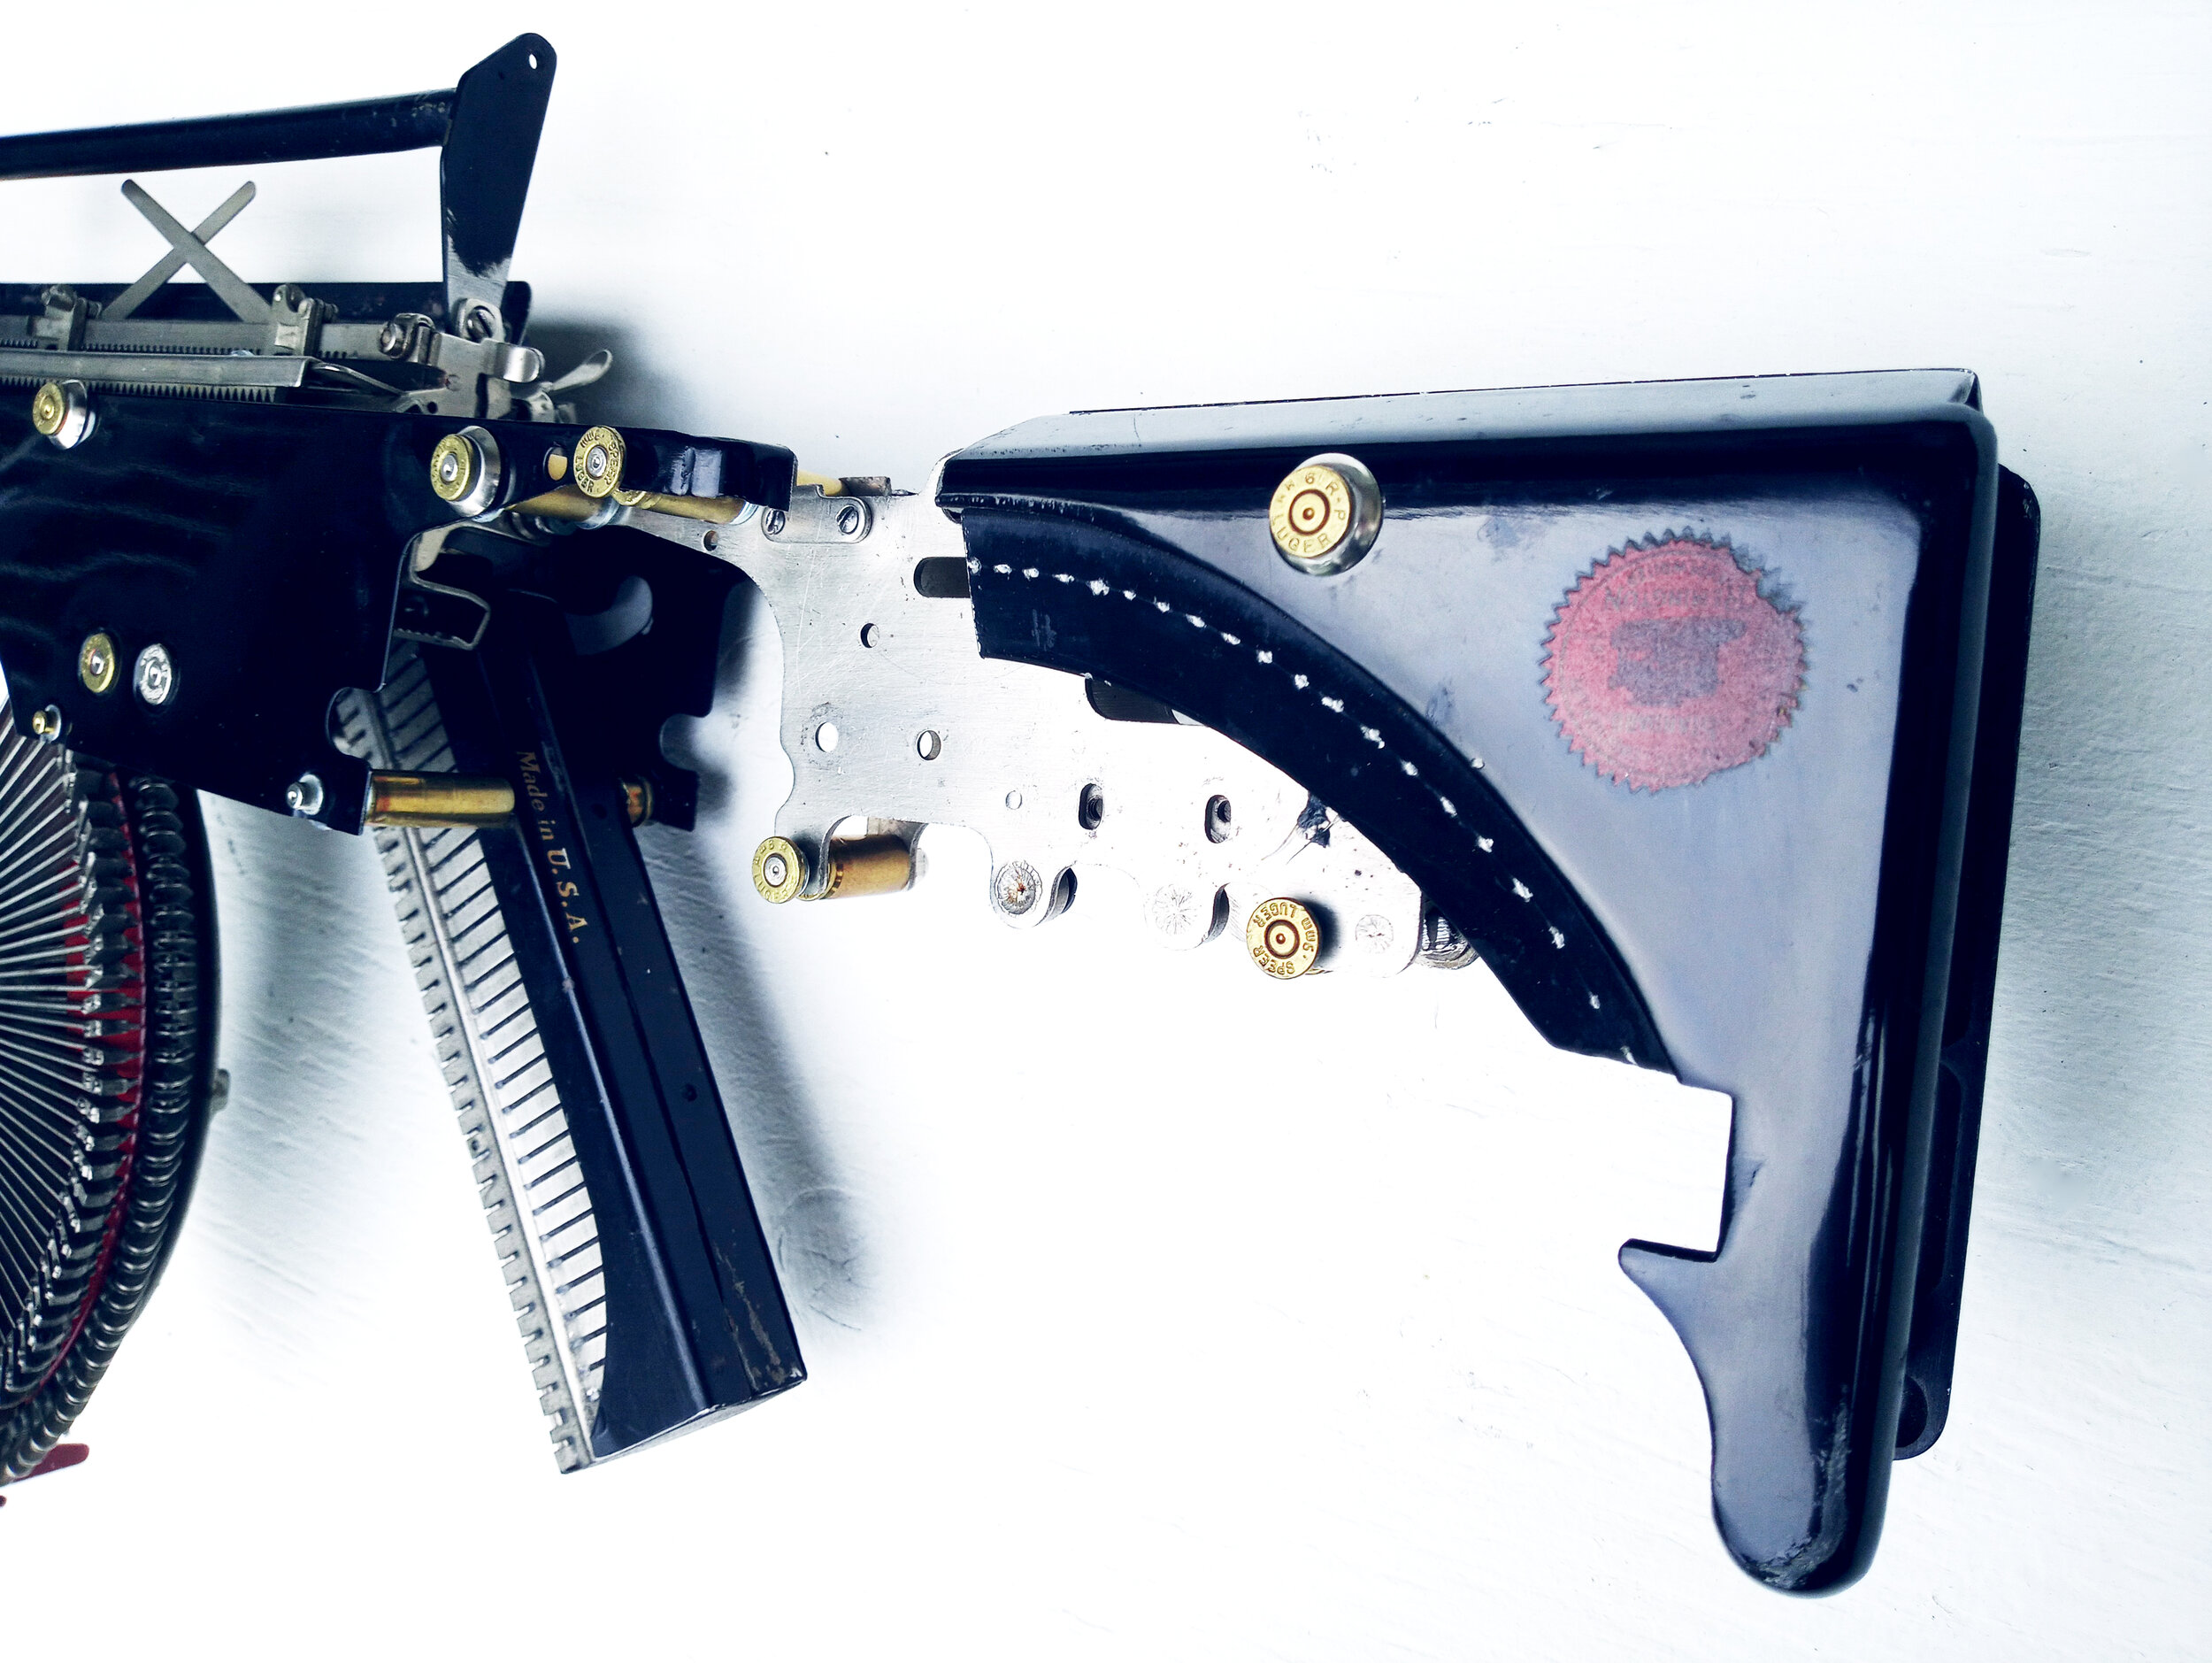  Eric Nado  - Remington Trilogy  - Typewriter MachineGun series- Aprox. Size: 11" x 30" x 3” inches. Transformed vintage Remington typewriter gun - Sculptural Wall Installation 